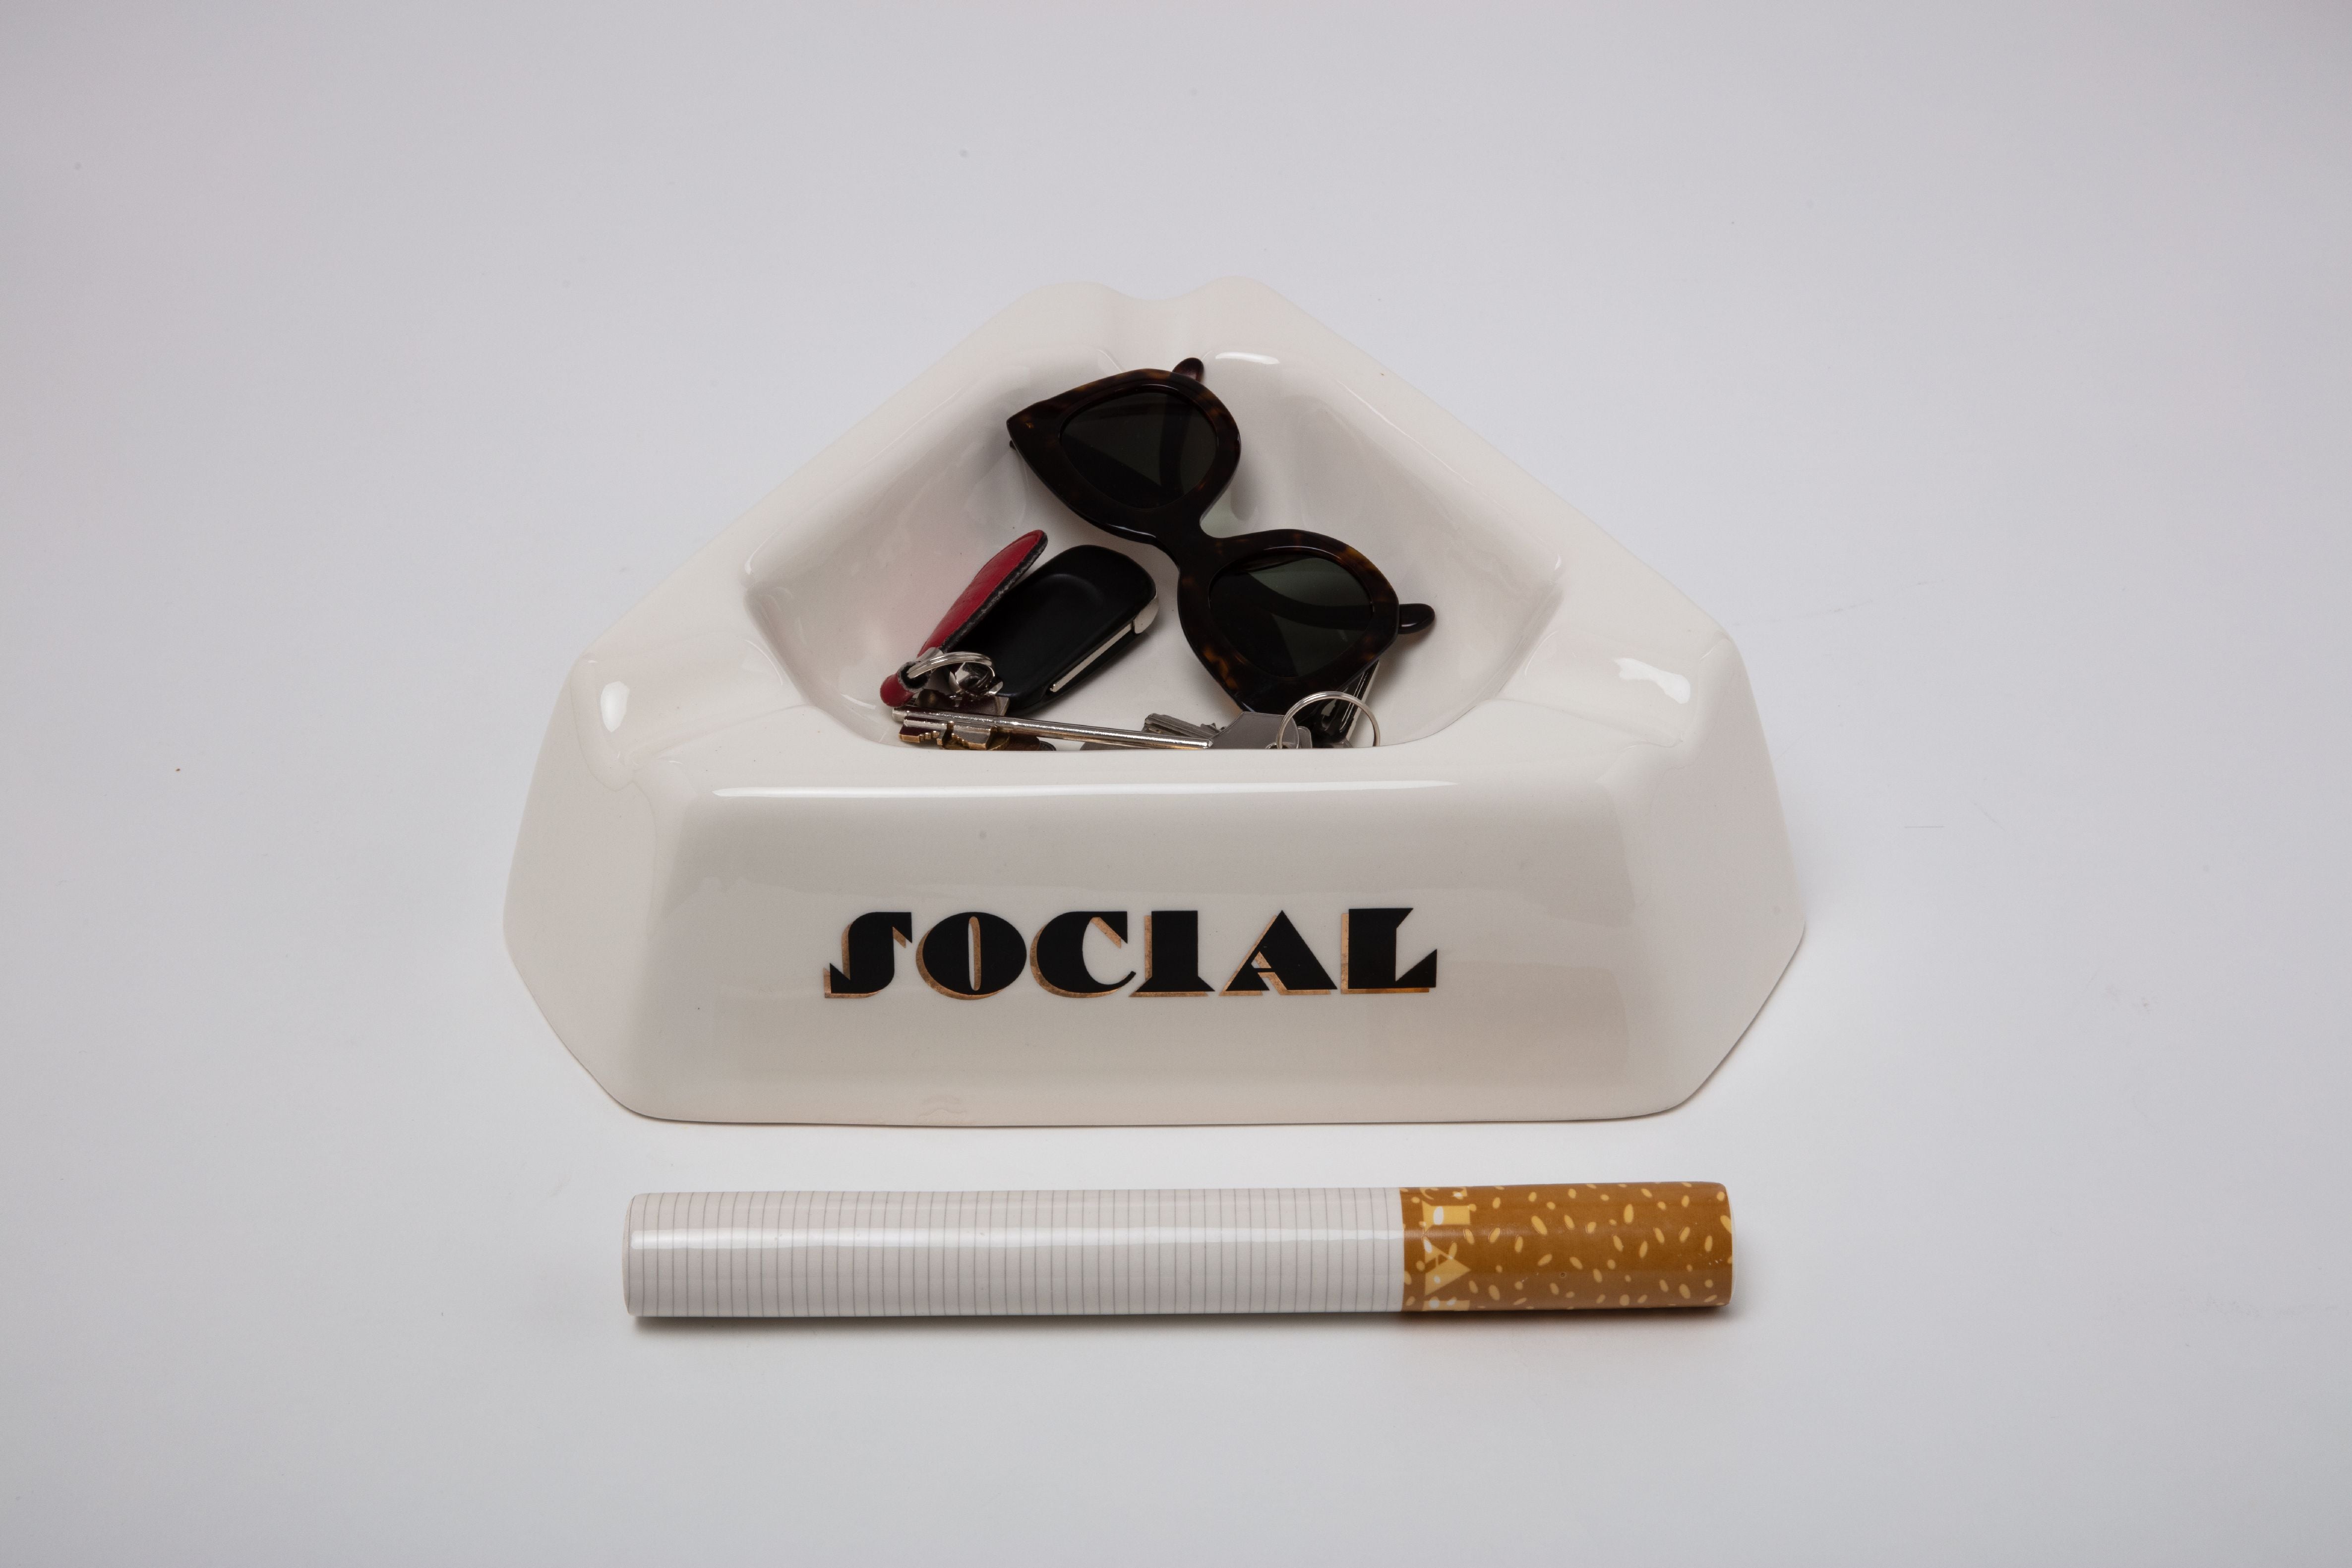 Corenteta de Seletti Social Smoker